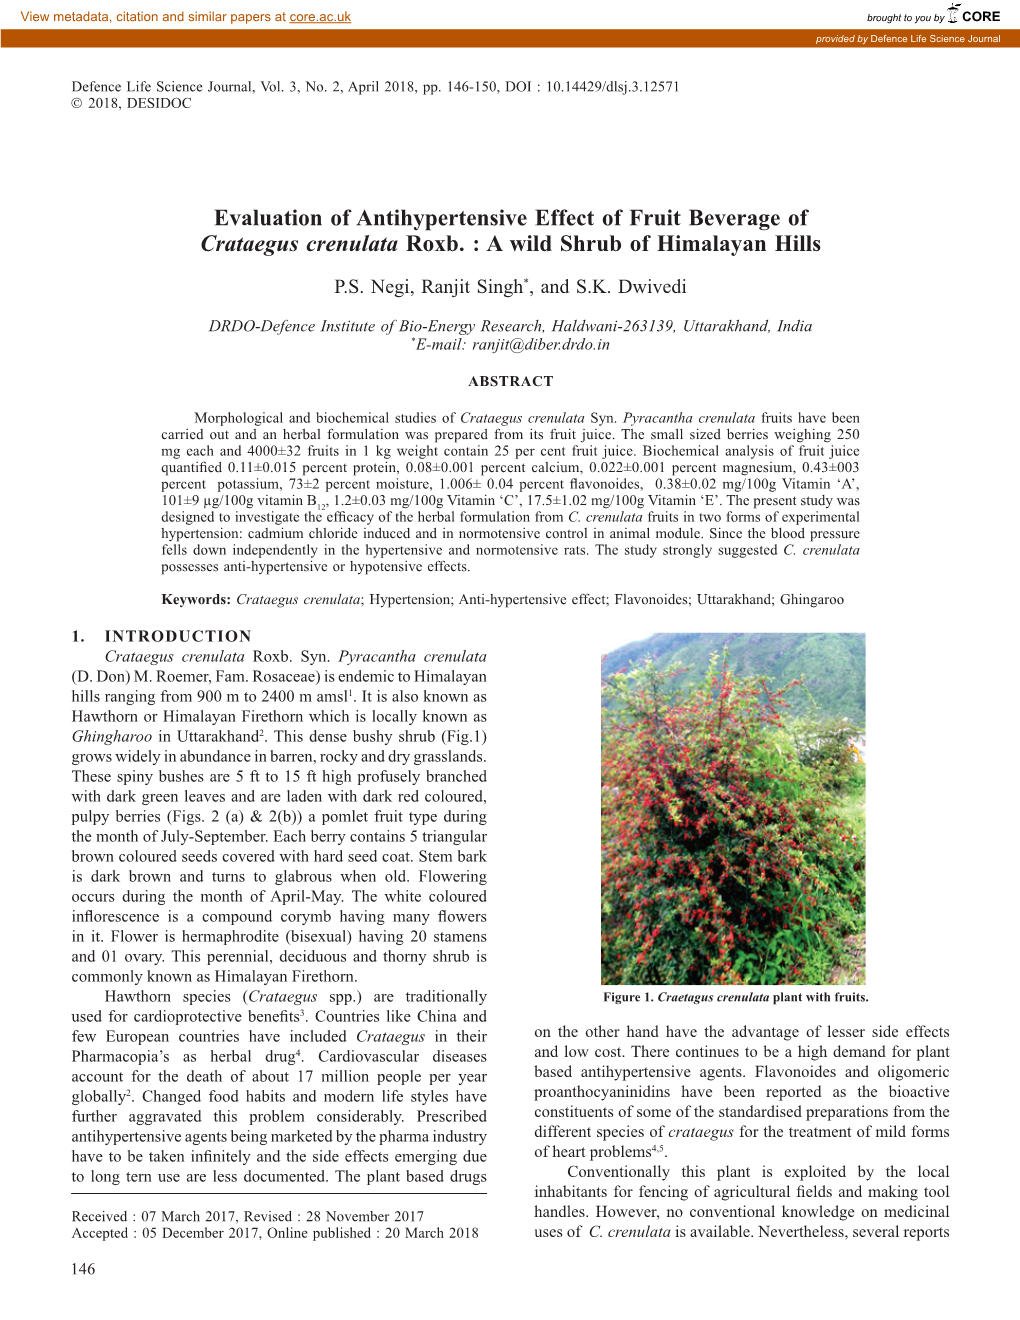 Evaluation of Antihypertensive Effect of Fruit Beverage of Crataegus Crenulata Roxb